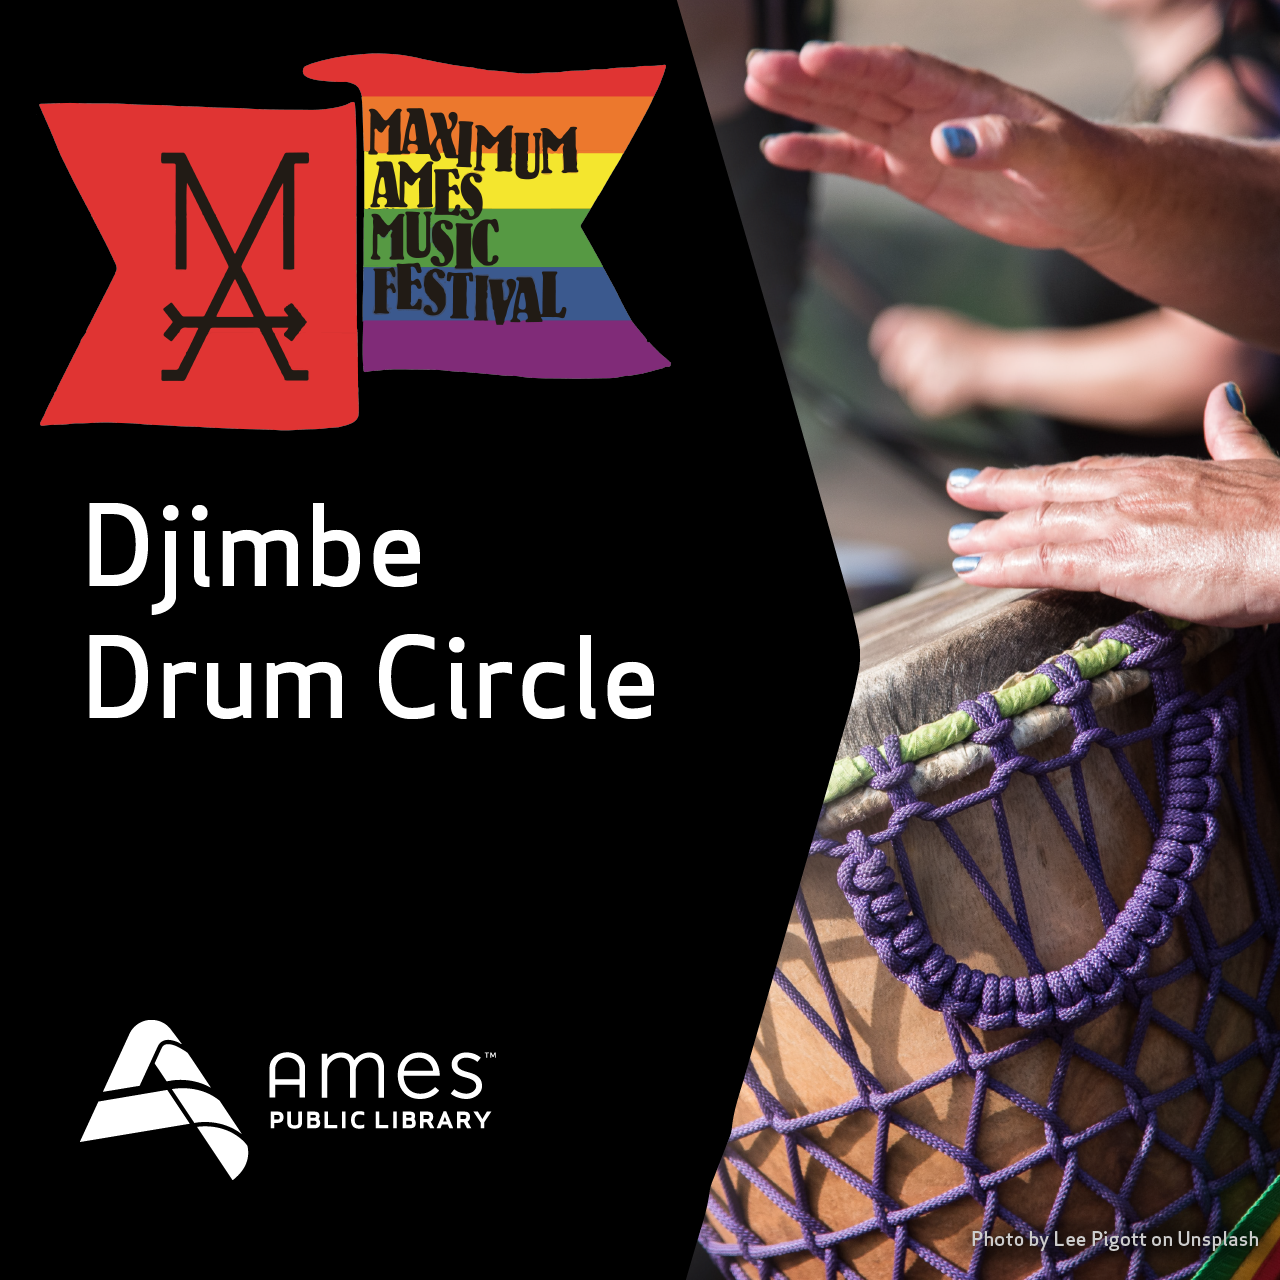 Maximum Ames Music Festival: Djimbe Drum Circle